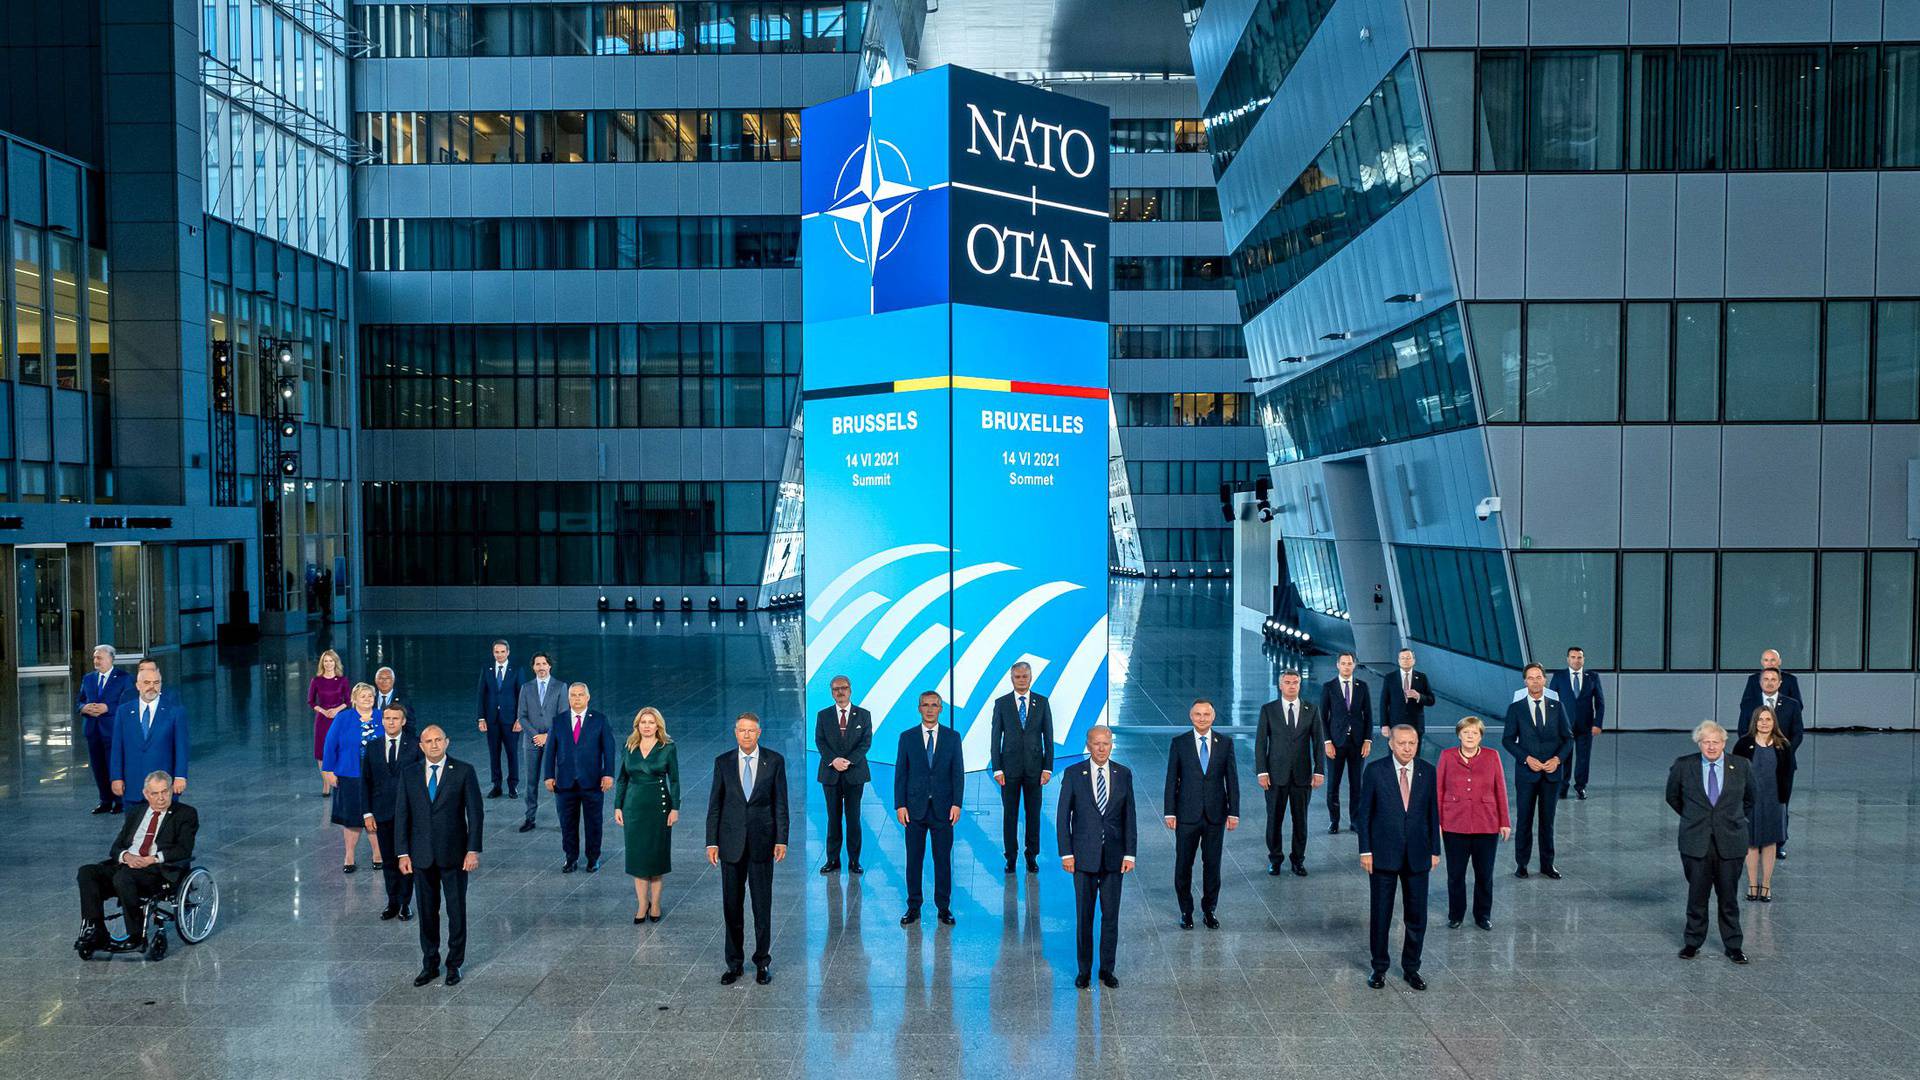 Official Portrait of NATO Allies